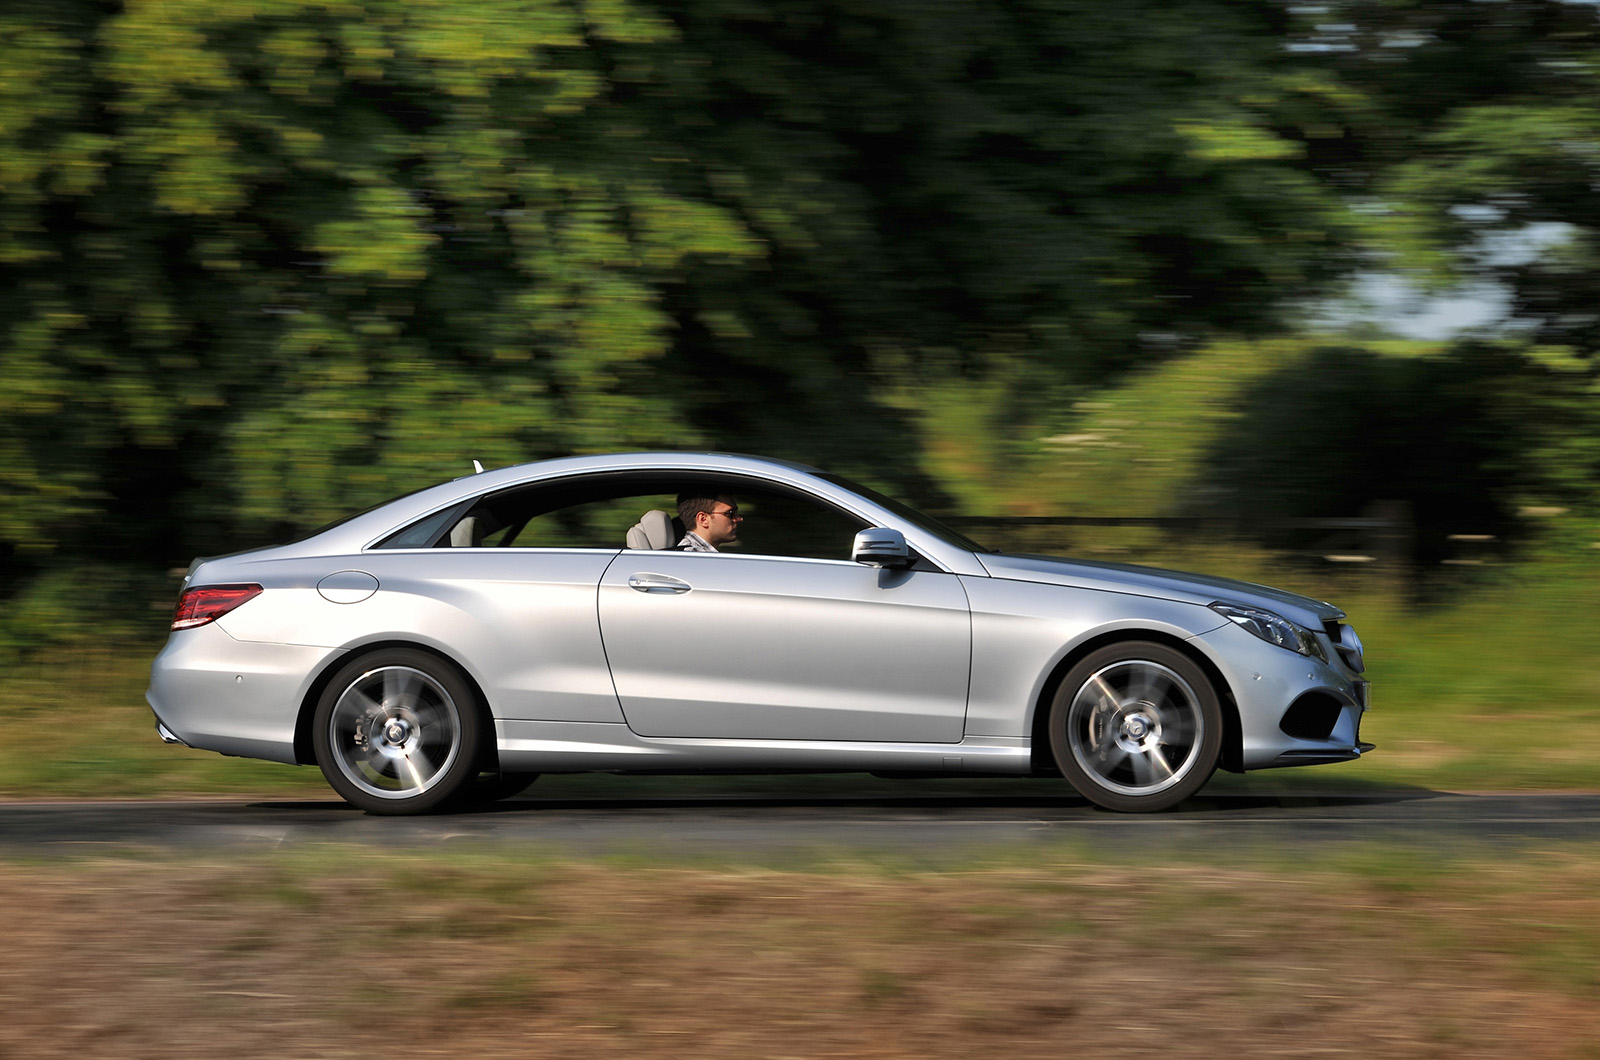 Mercedes e220 coupe review #1